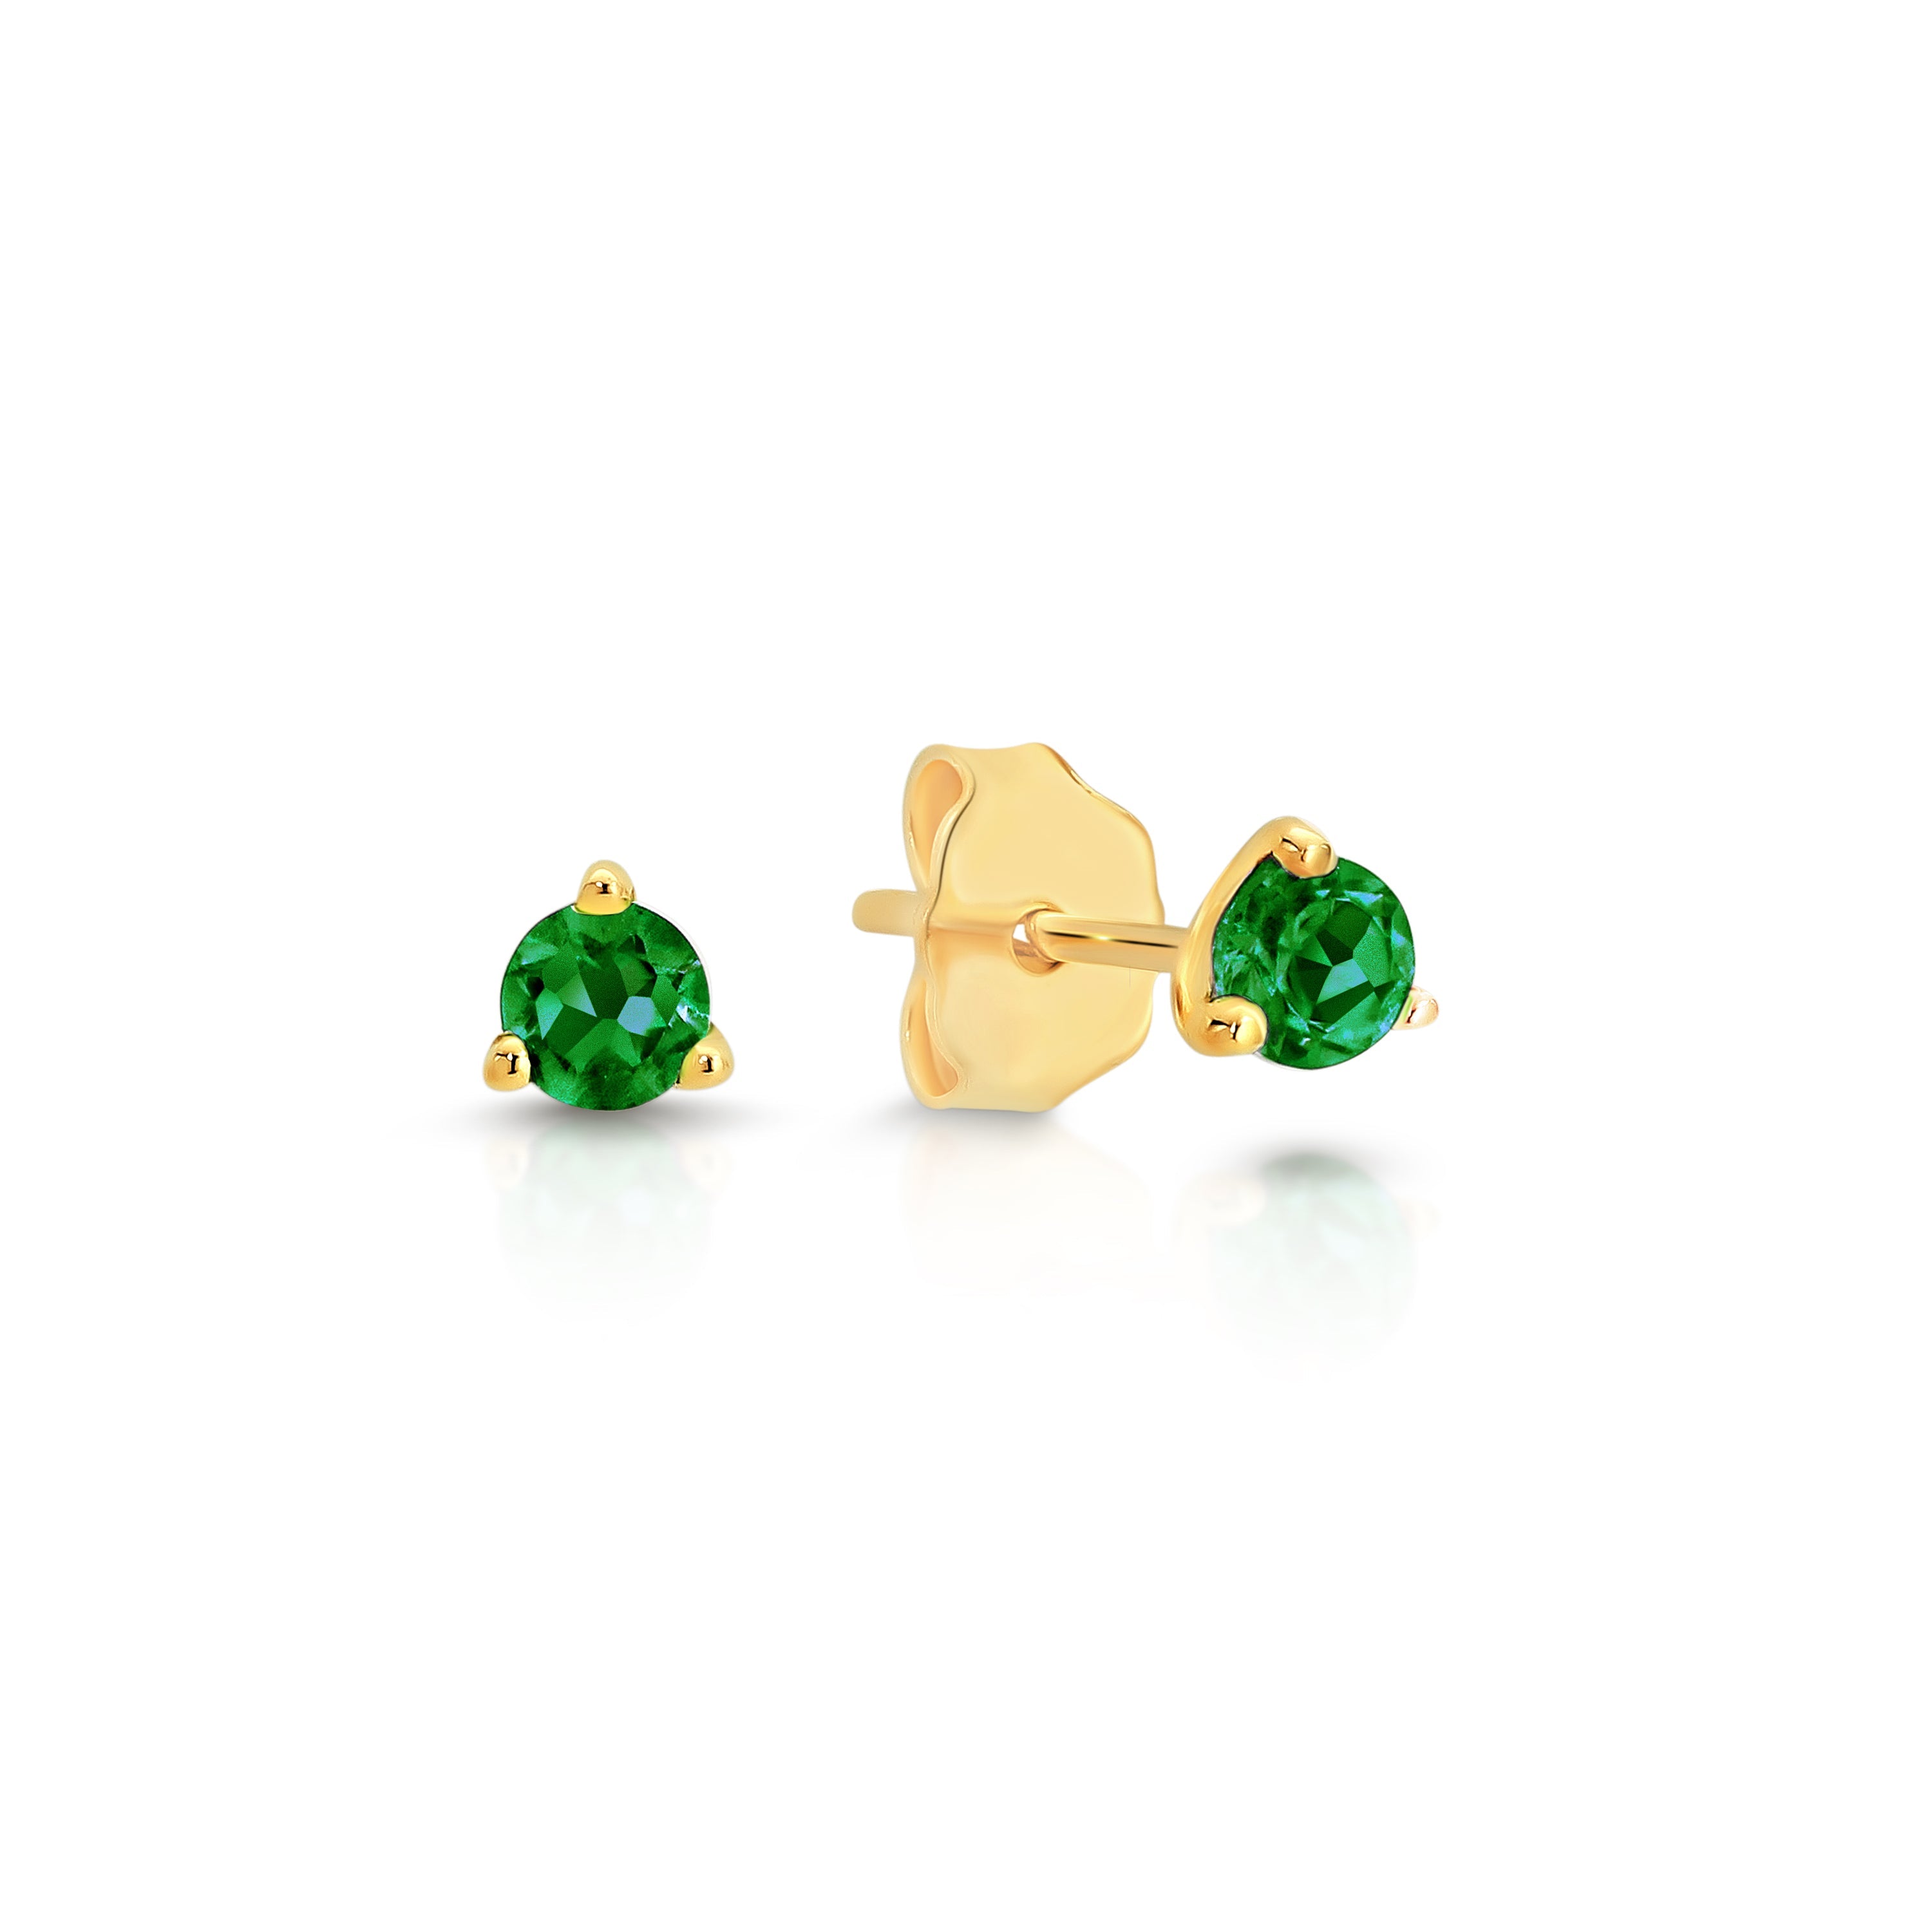 9ct created emerald earrings